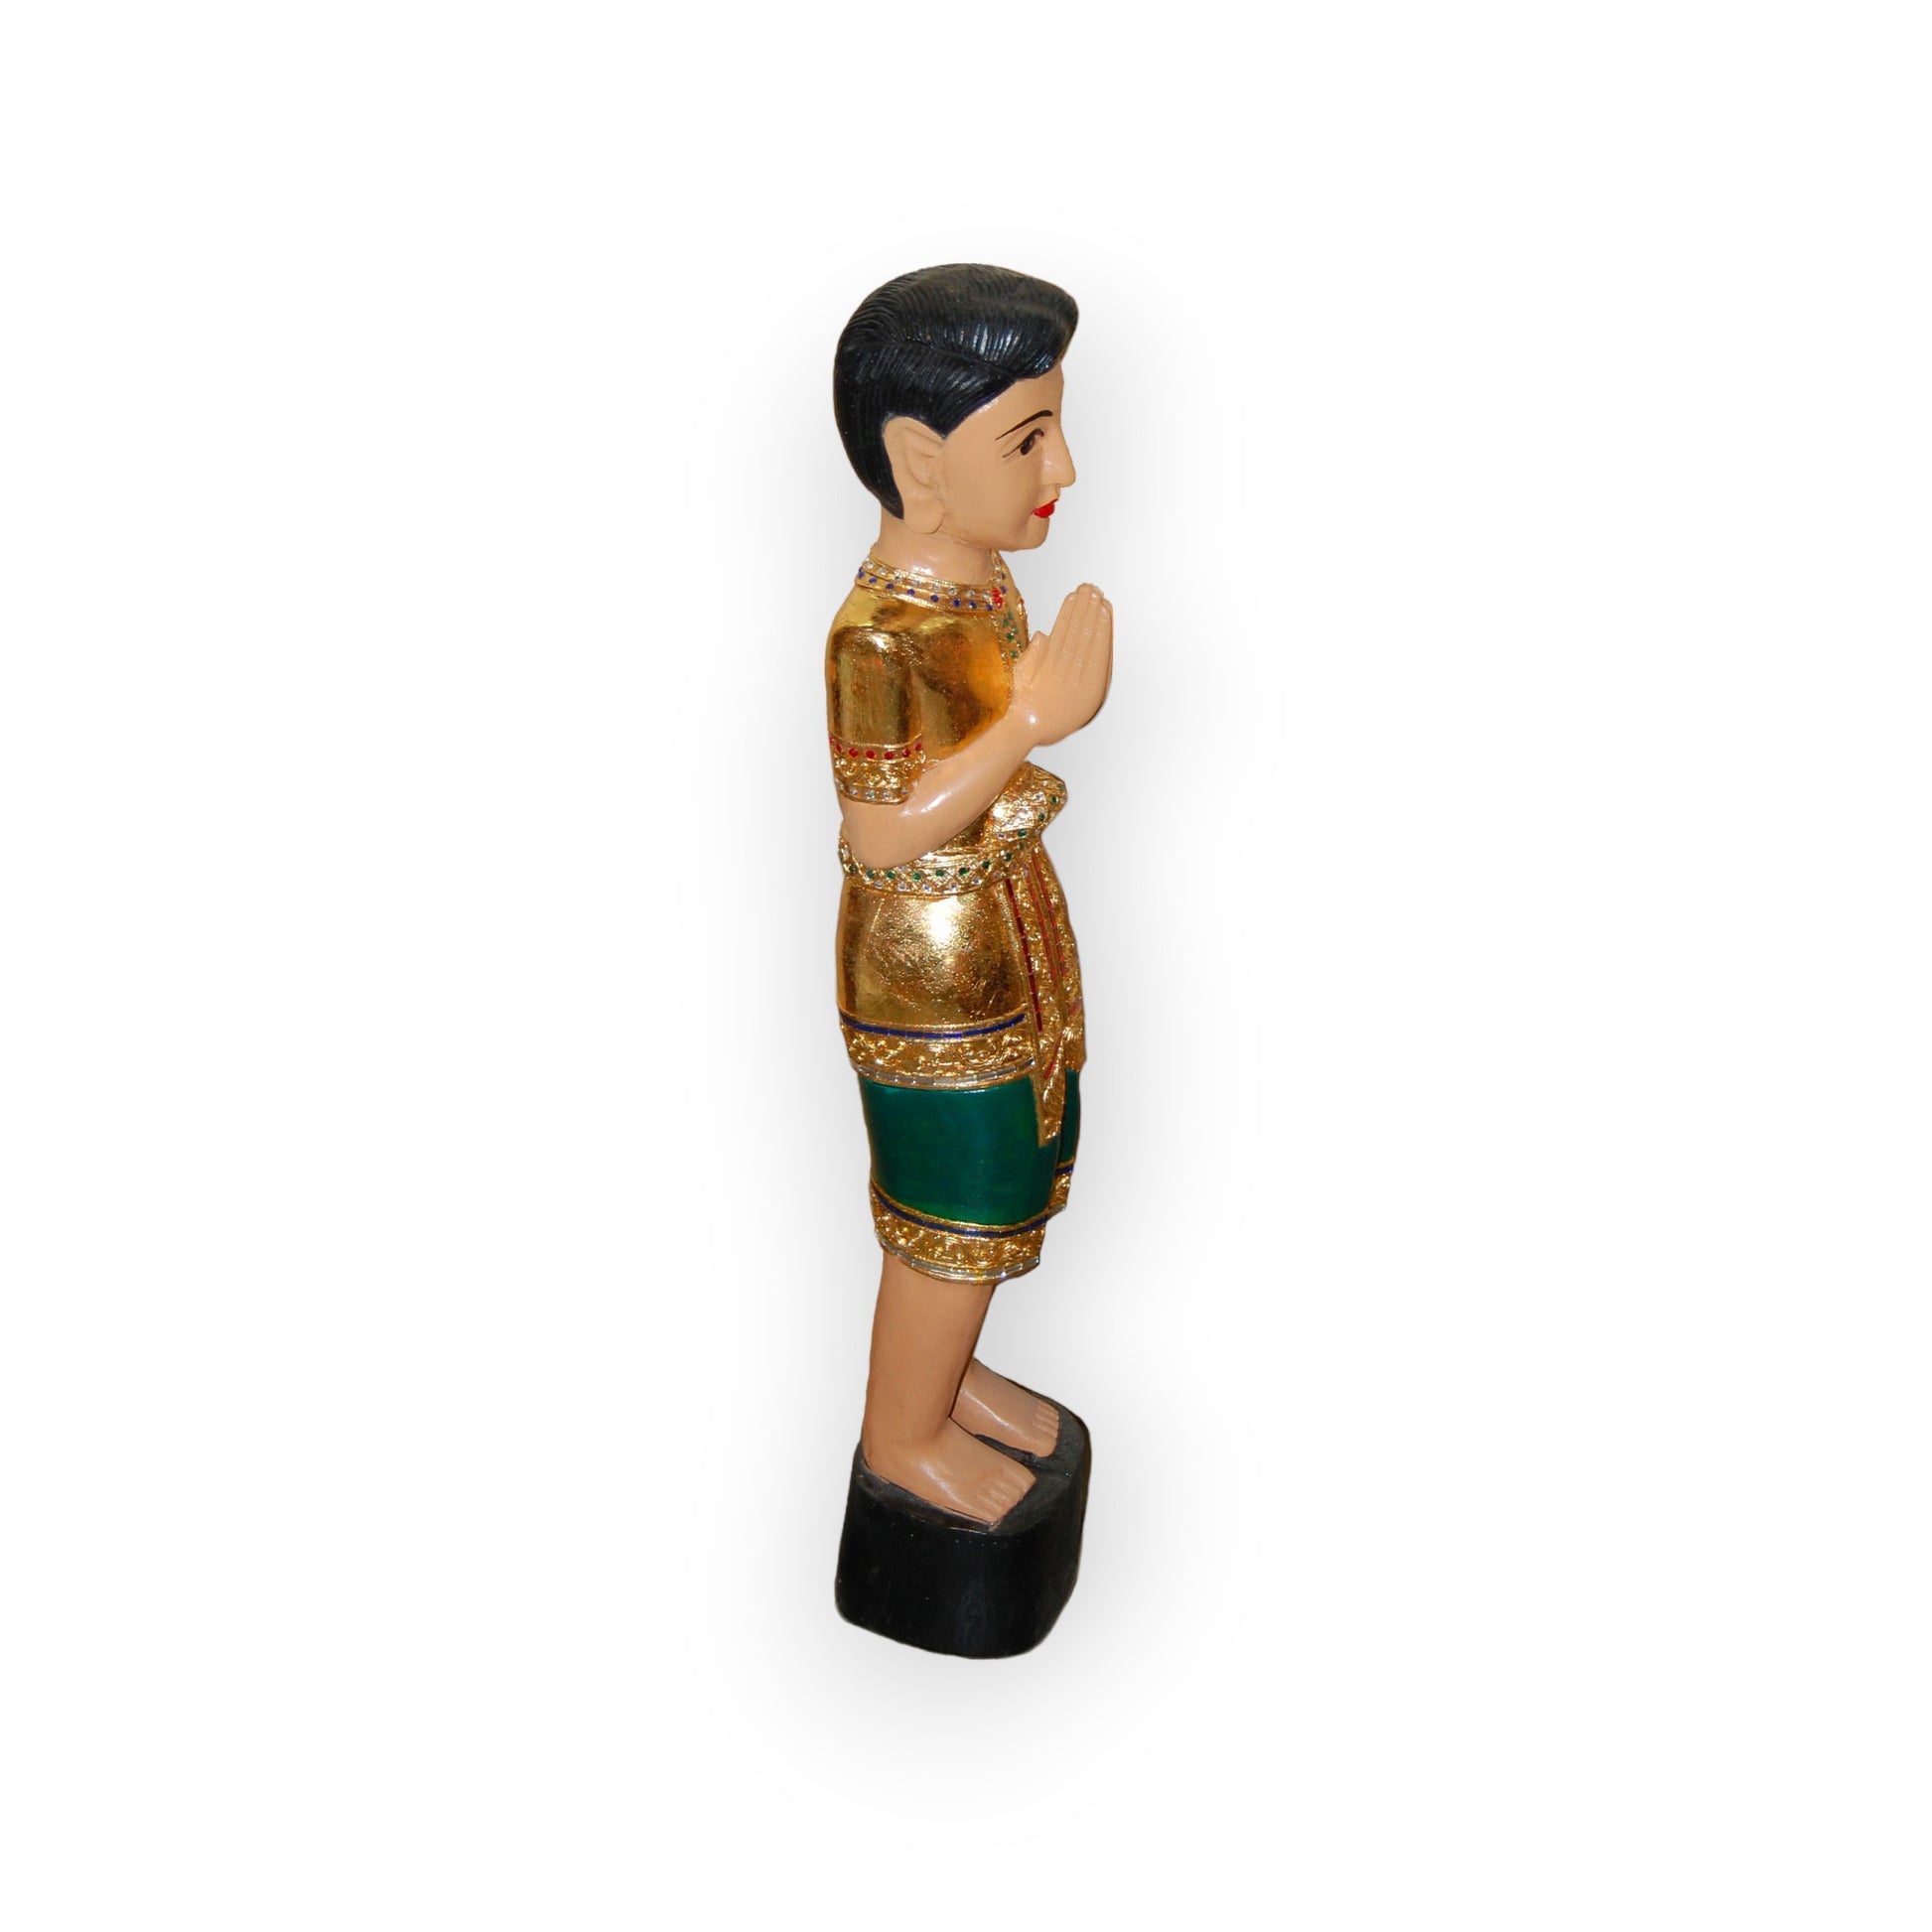 Sawasdee Statue of a Thai Boy in Green 30" to 60" Tall